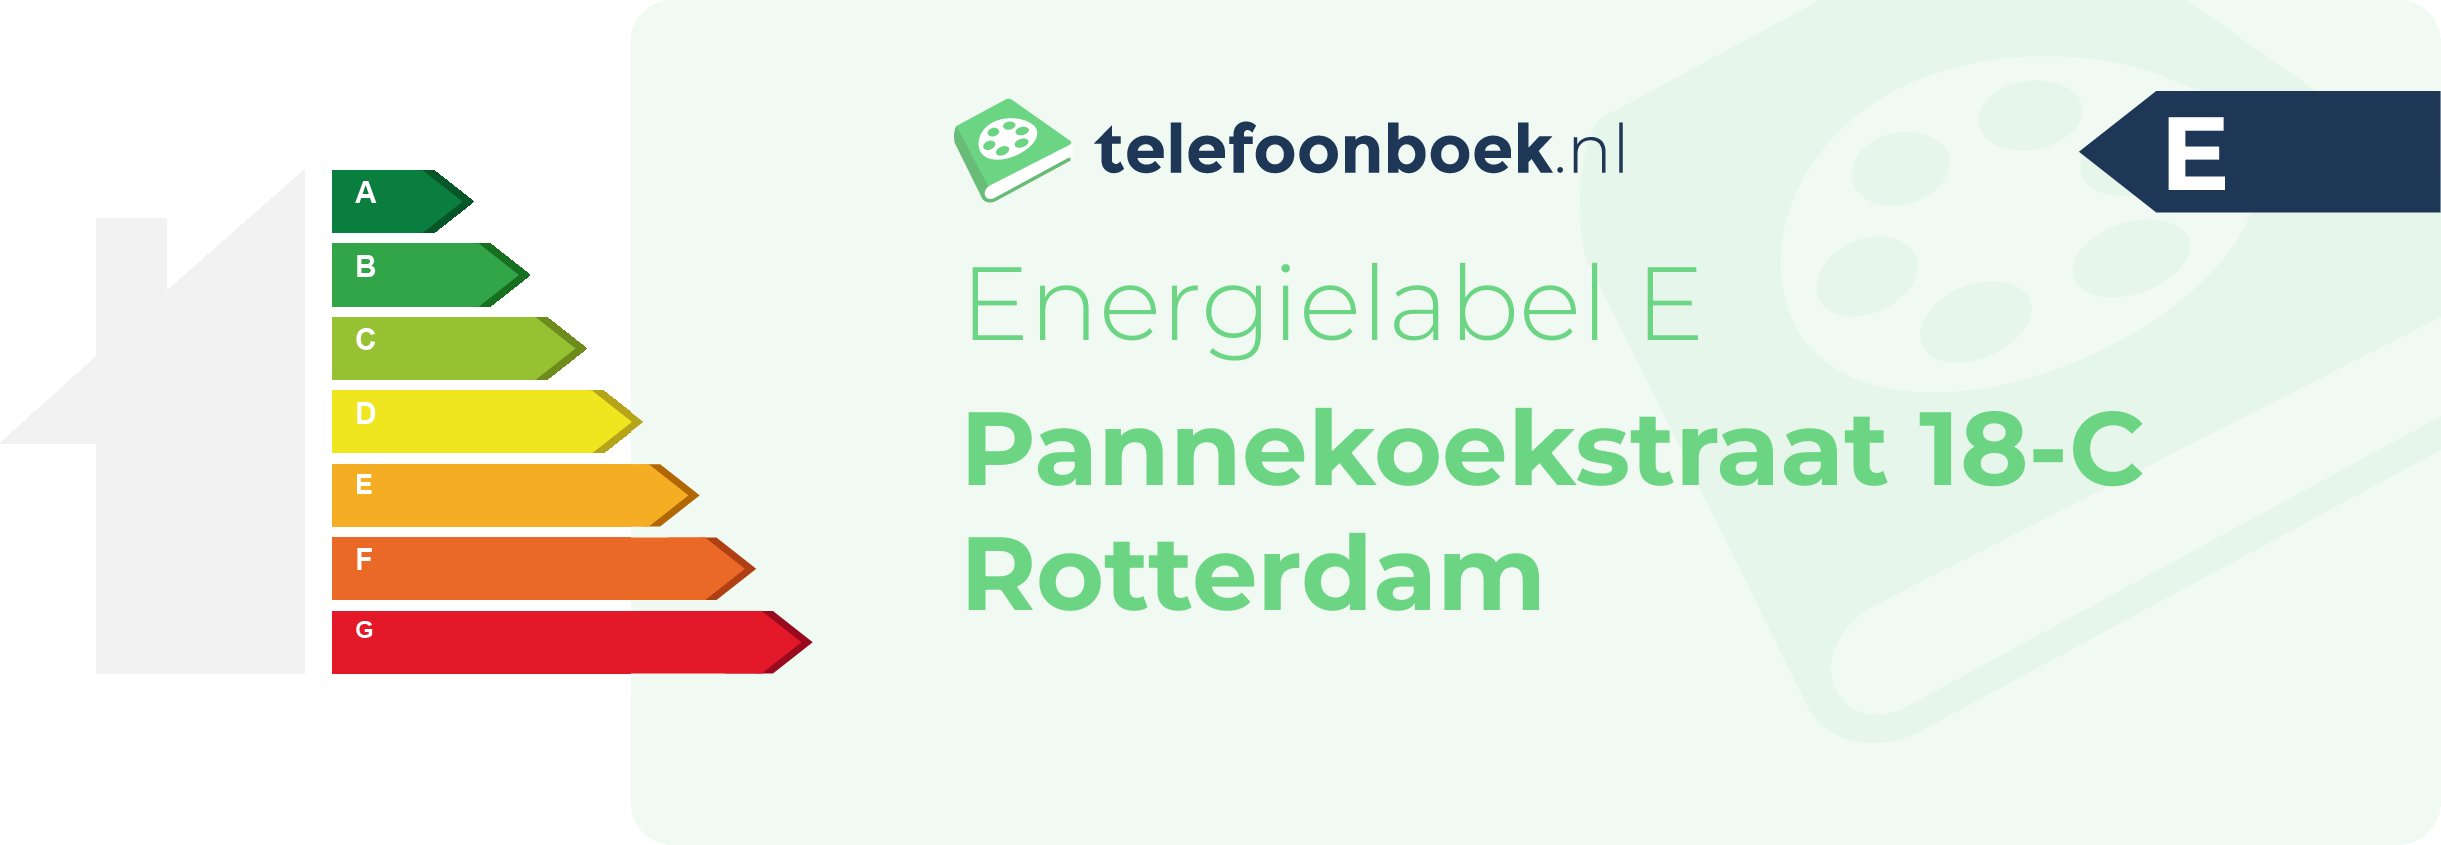 Energielabel Pannekoekstraat 18-C Rotterdam